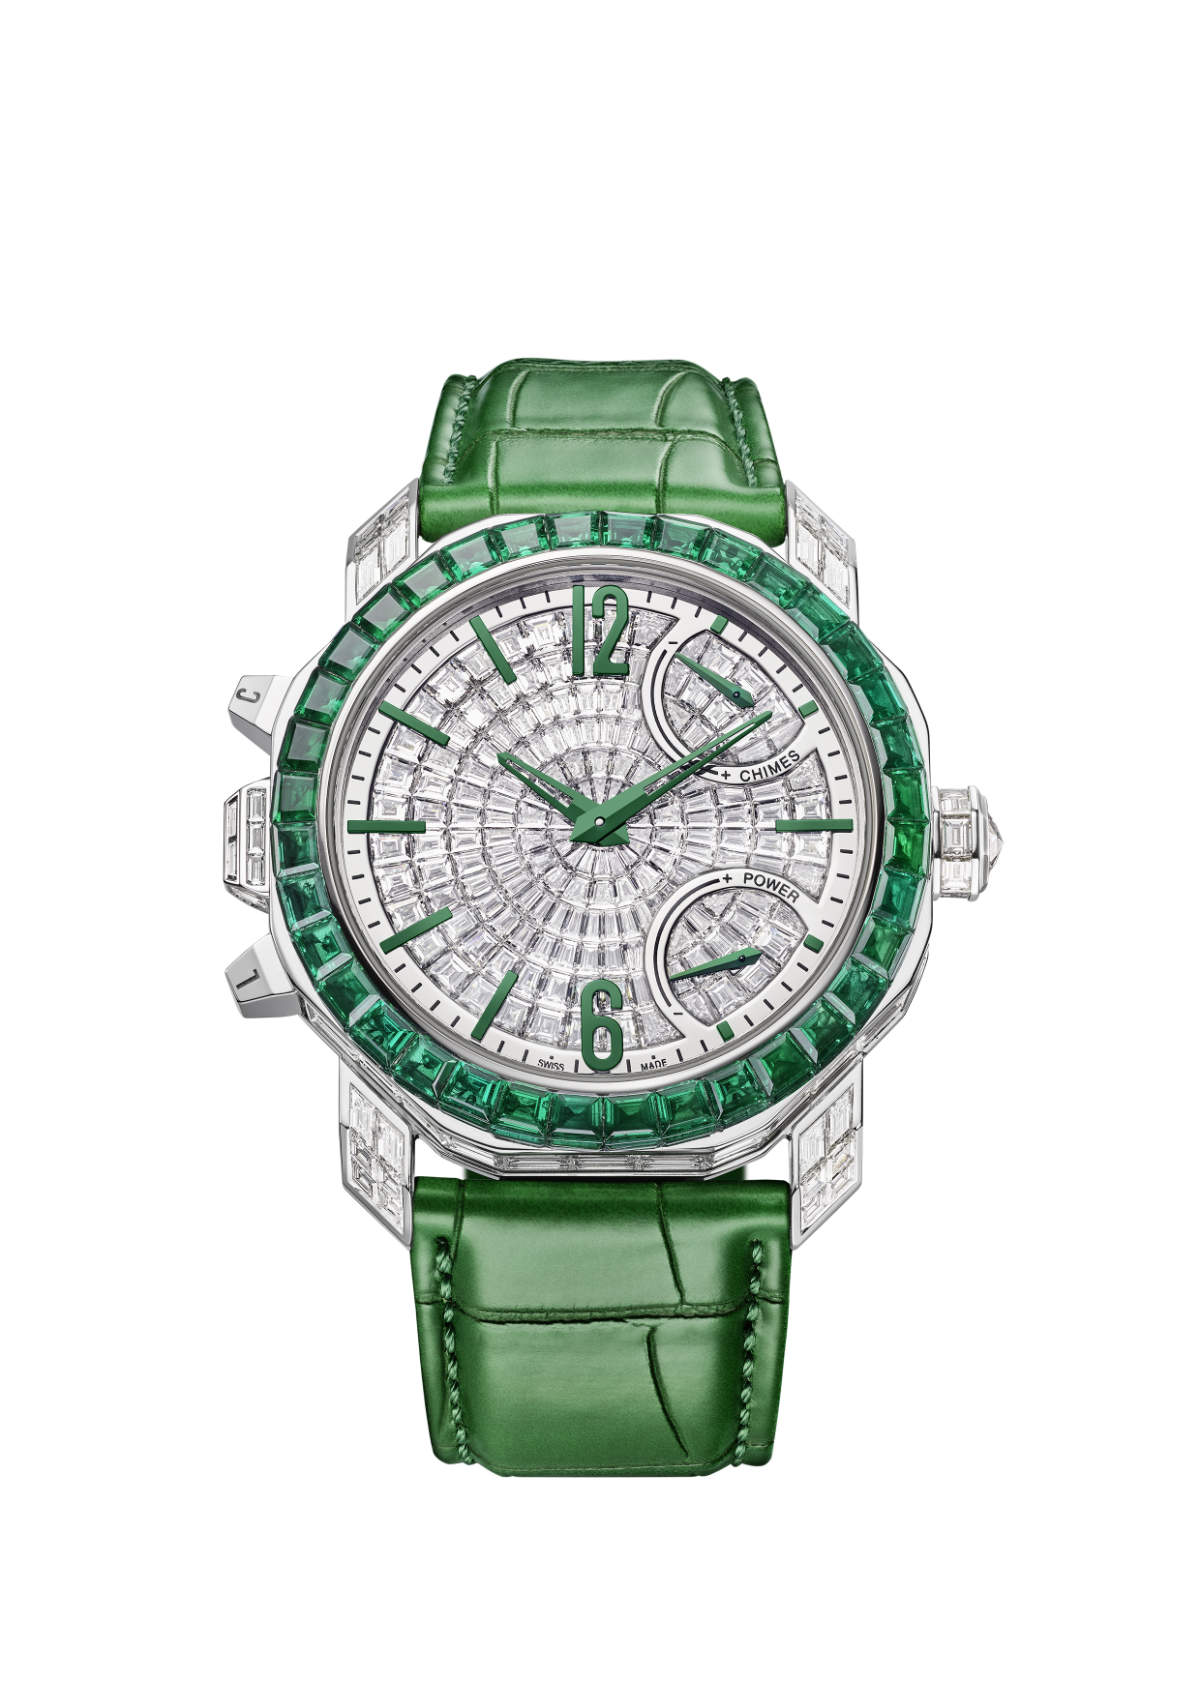 LVMH Watch Week: Bulgari Demonstrates Its Mastery of Haute Horlogerie &  Haute Joaillerie - Revolution Watch